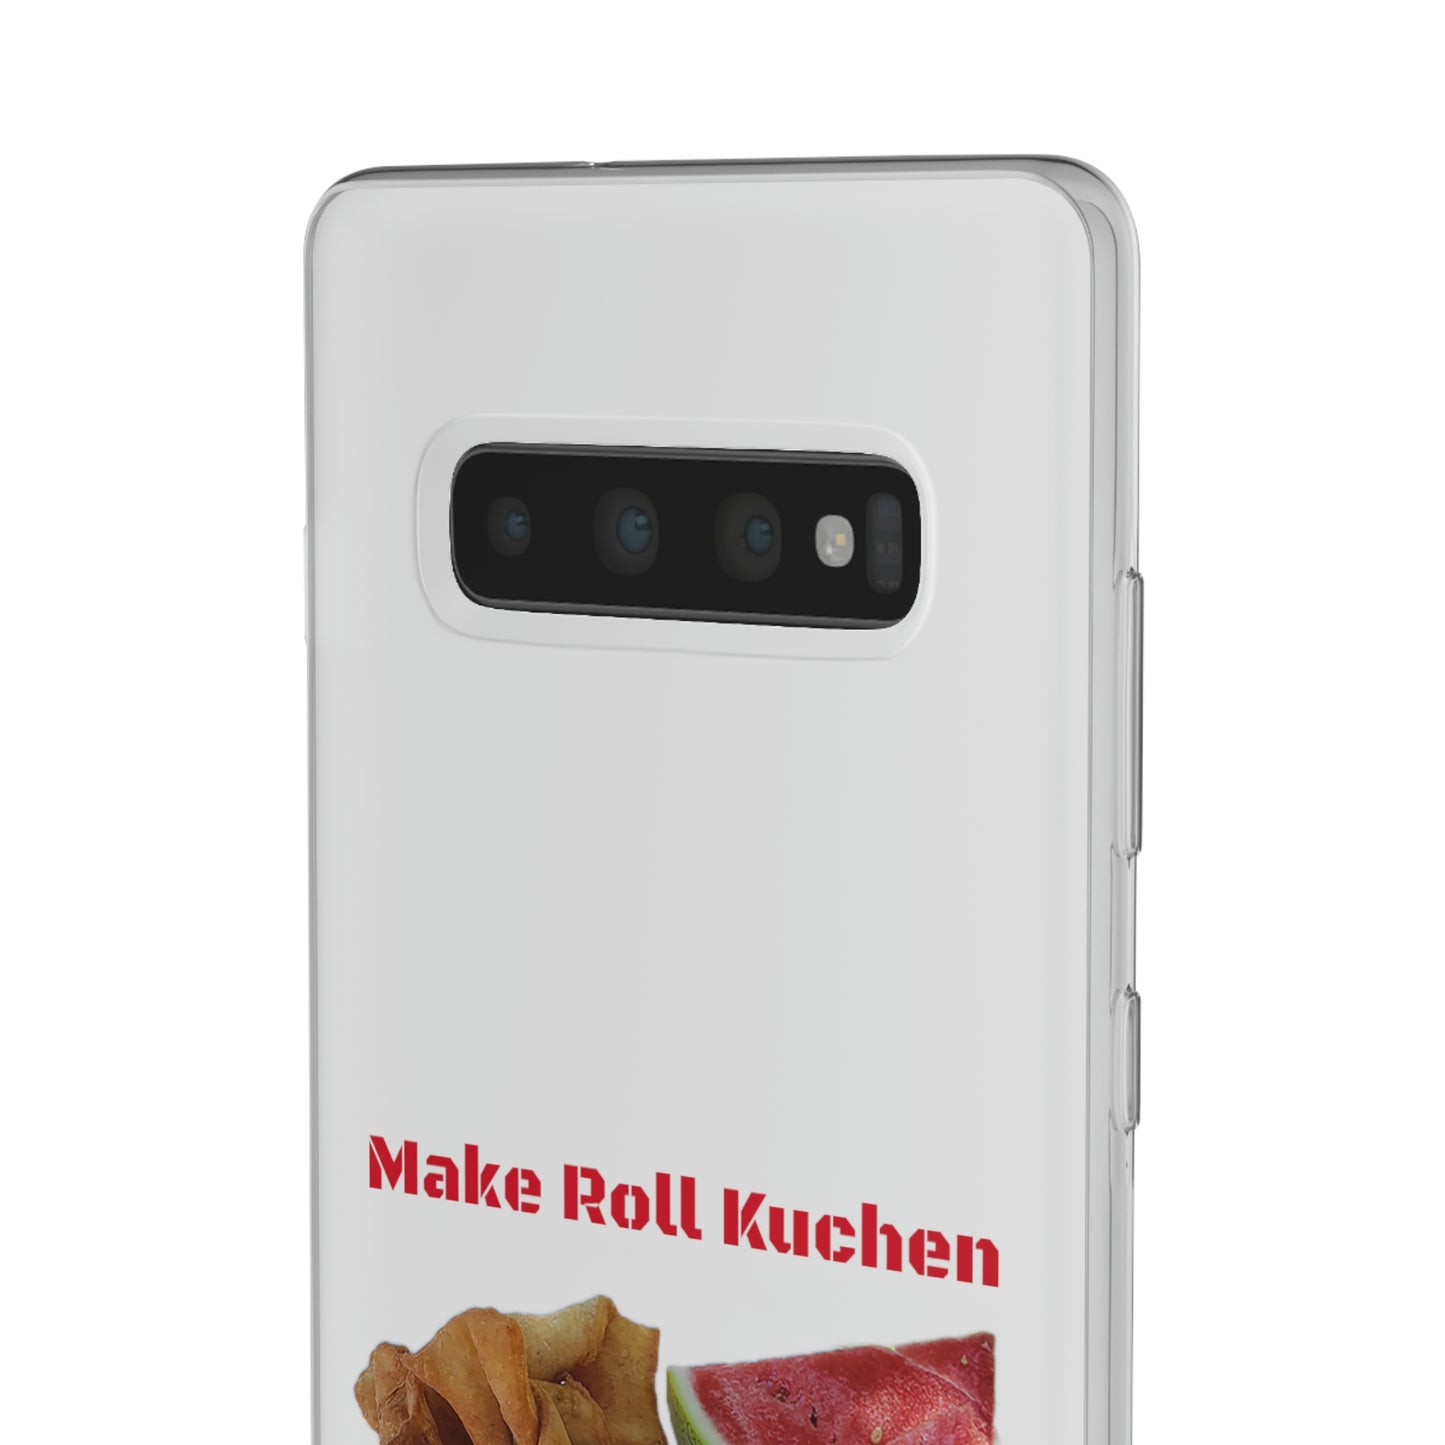 Make Roll Kuchen Great Again Samsung Flexi Case